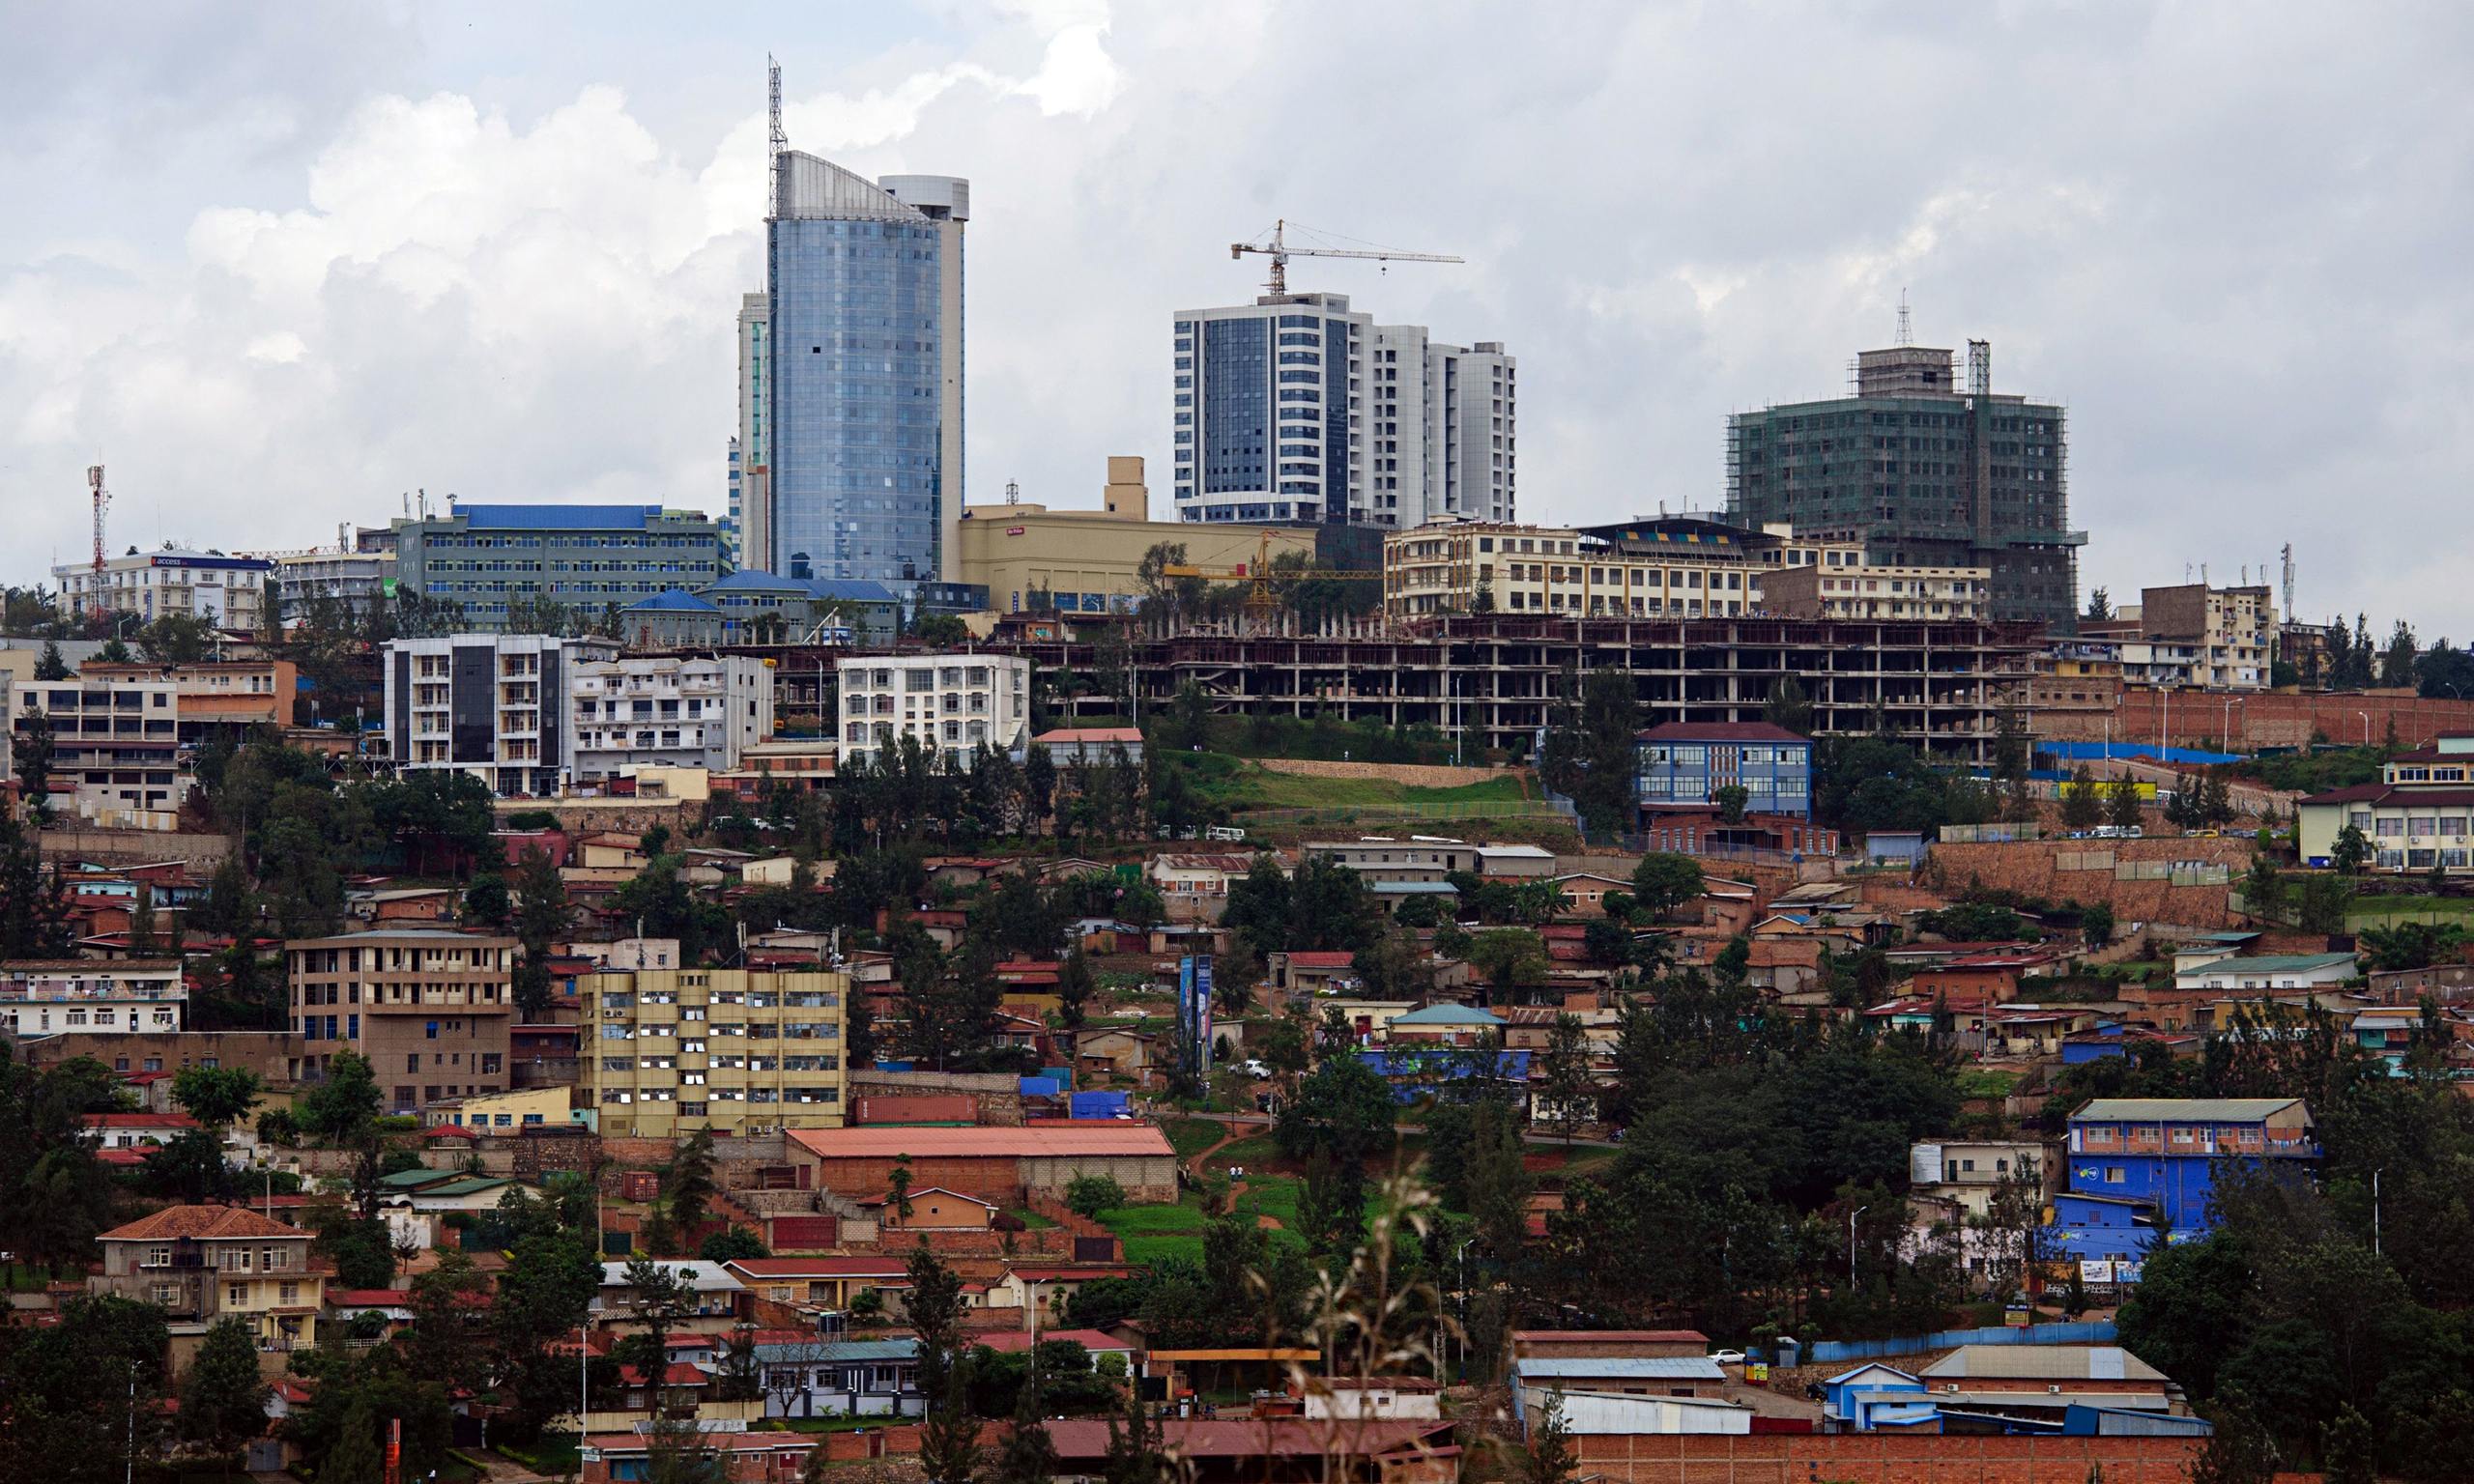 Kigali's future or costly fantasy? Plan to reshape Rwandan city divides